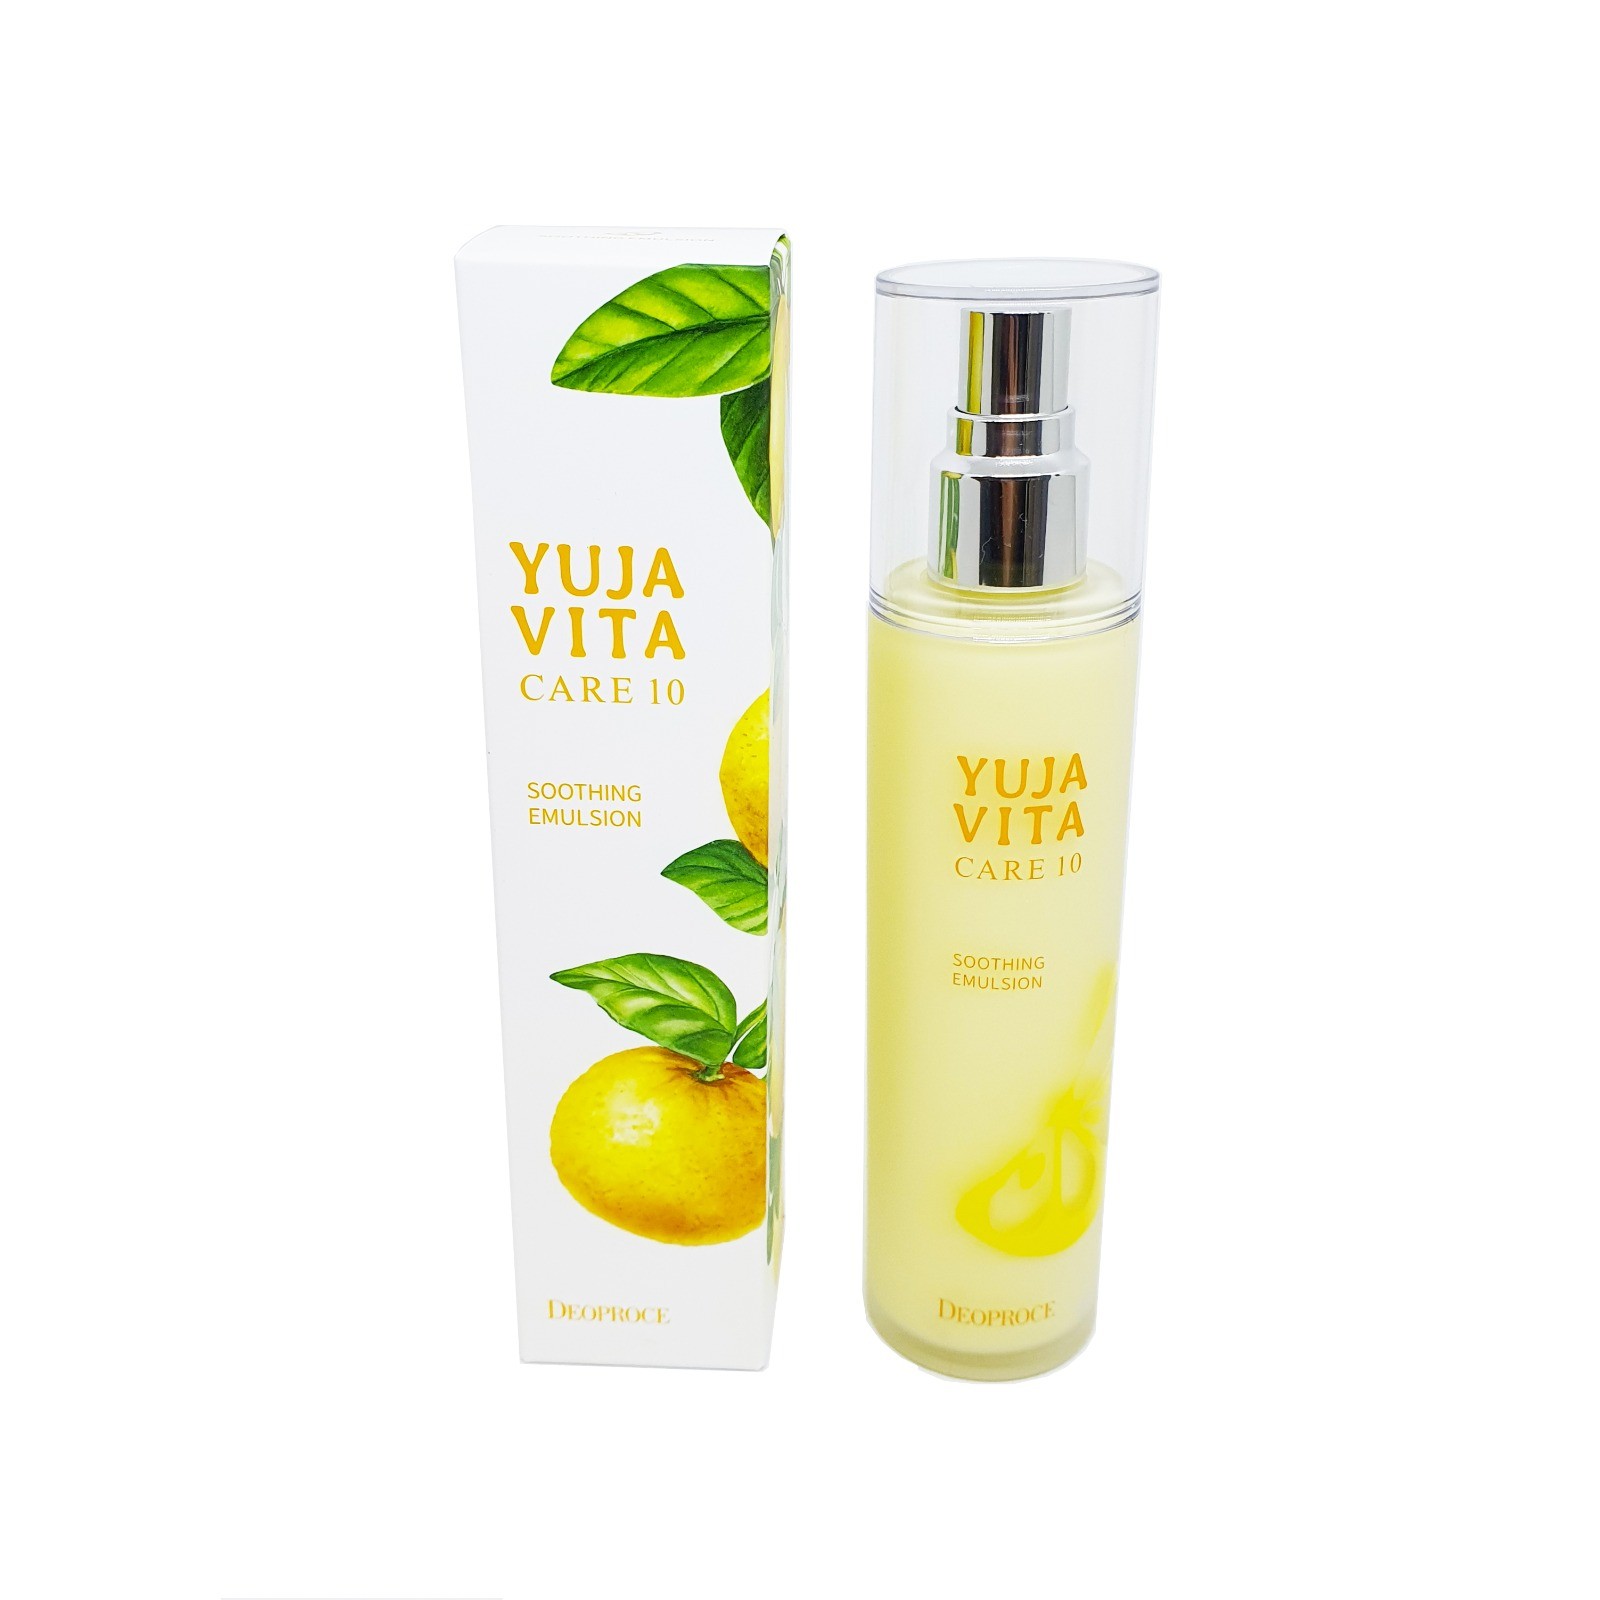 Осветляющая эмульсия Deoproce Yuja Vita Care 10 Soothing Emulsion для зрелой кожи, 120 мл успокаивающая эмульсия barbados soothing emulsion